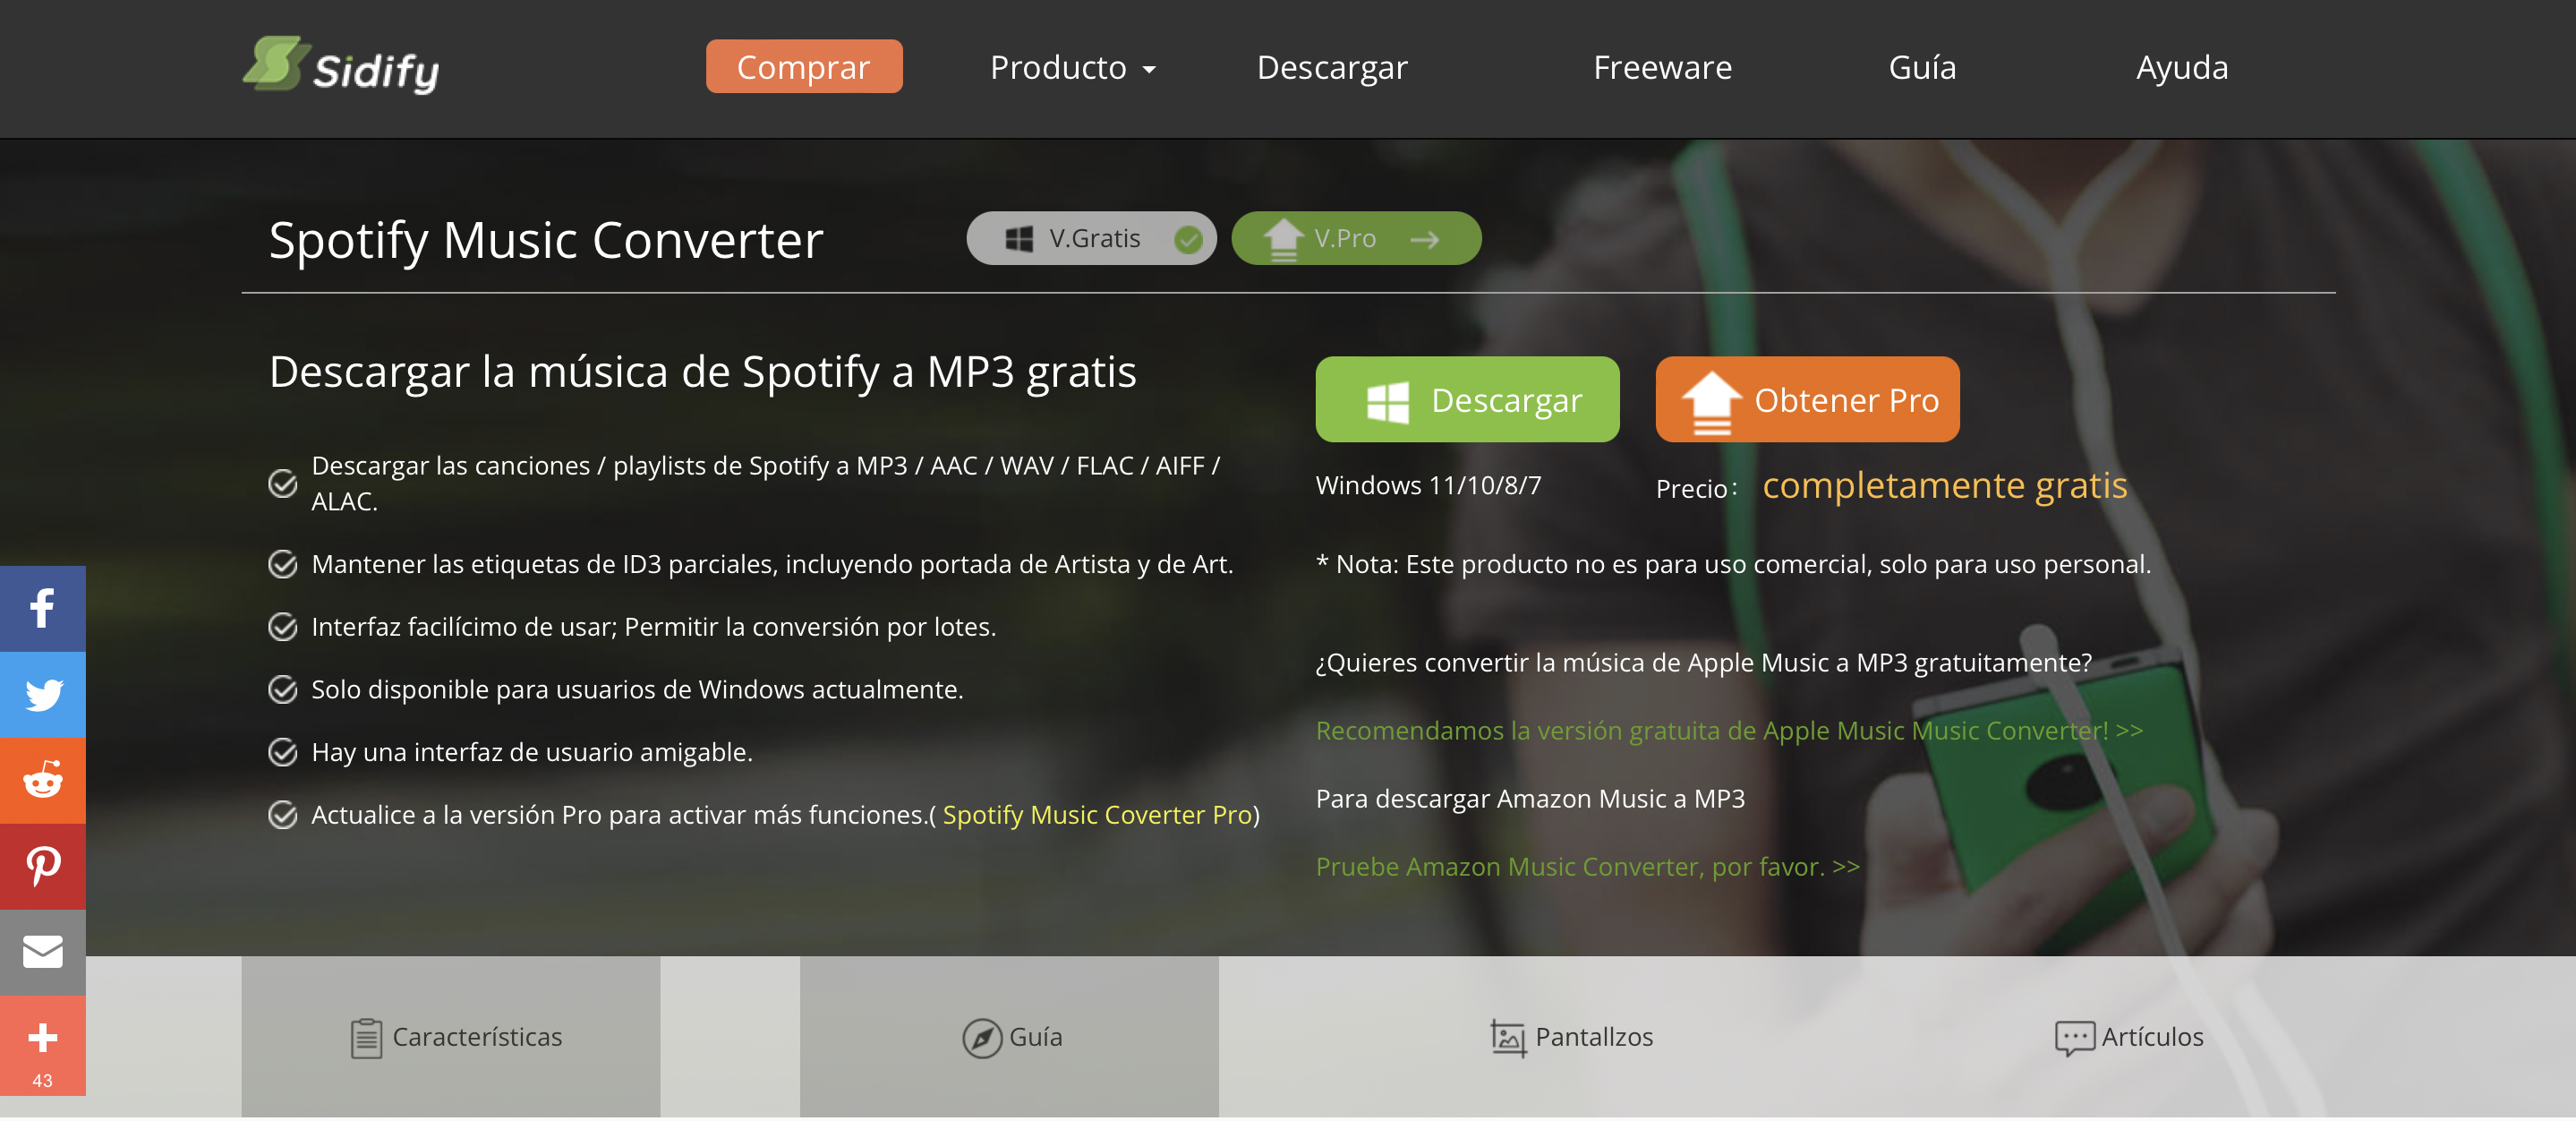 Spotify Music Converter.  (Photo: https://www.sidify.es/sidify-windows-free/drm-music-converter-free.html)